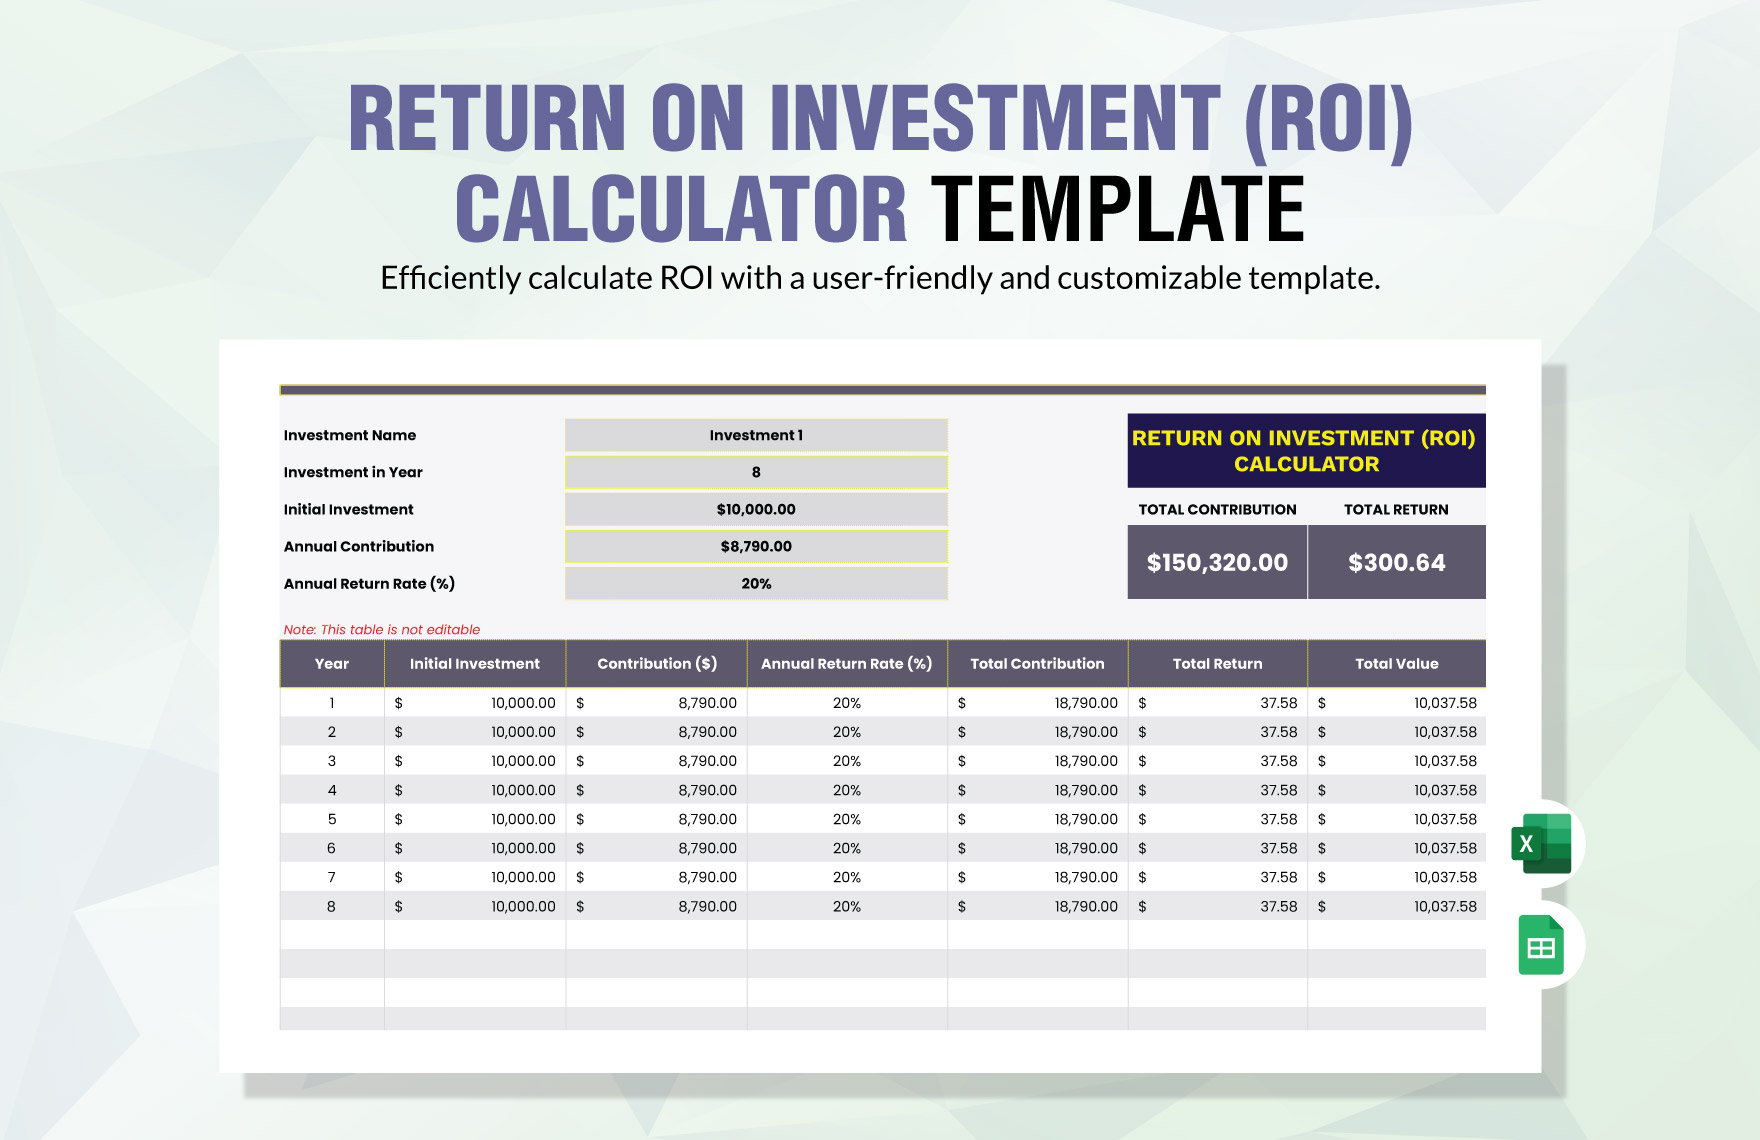 Return on Investment (ROI) Calculator Template